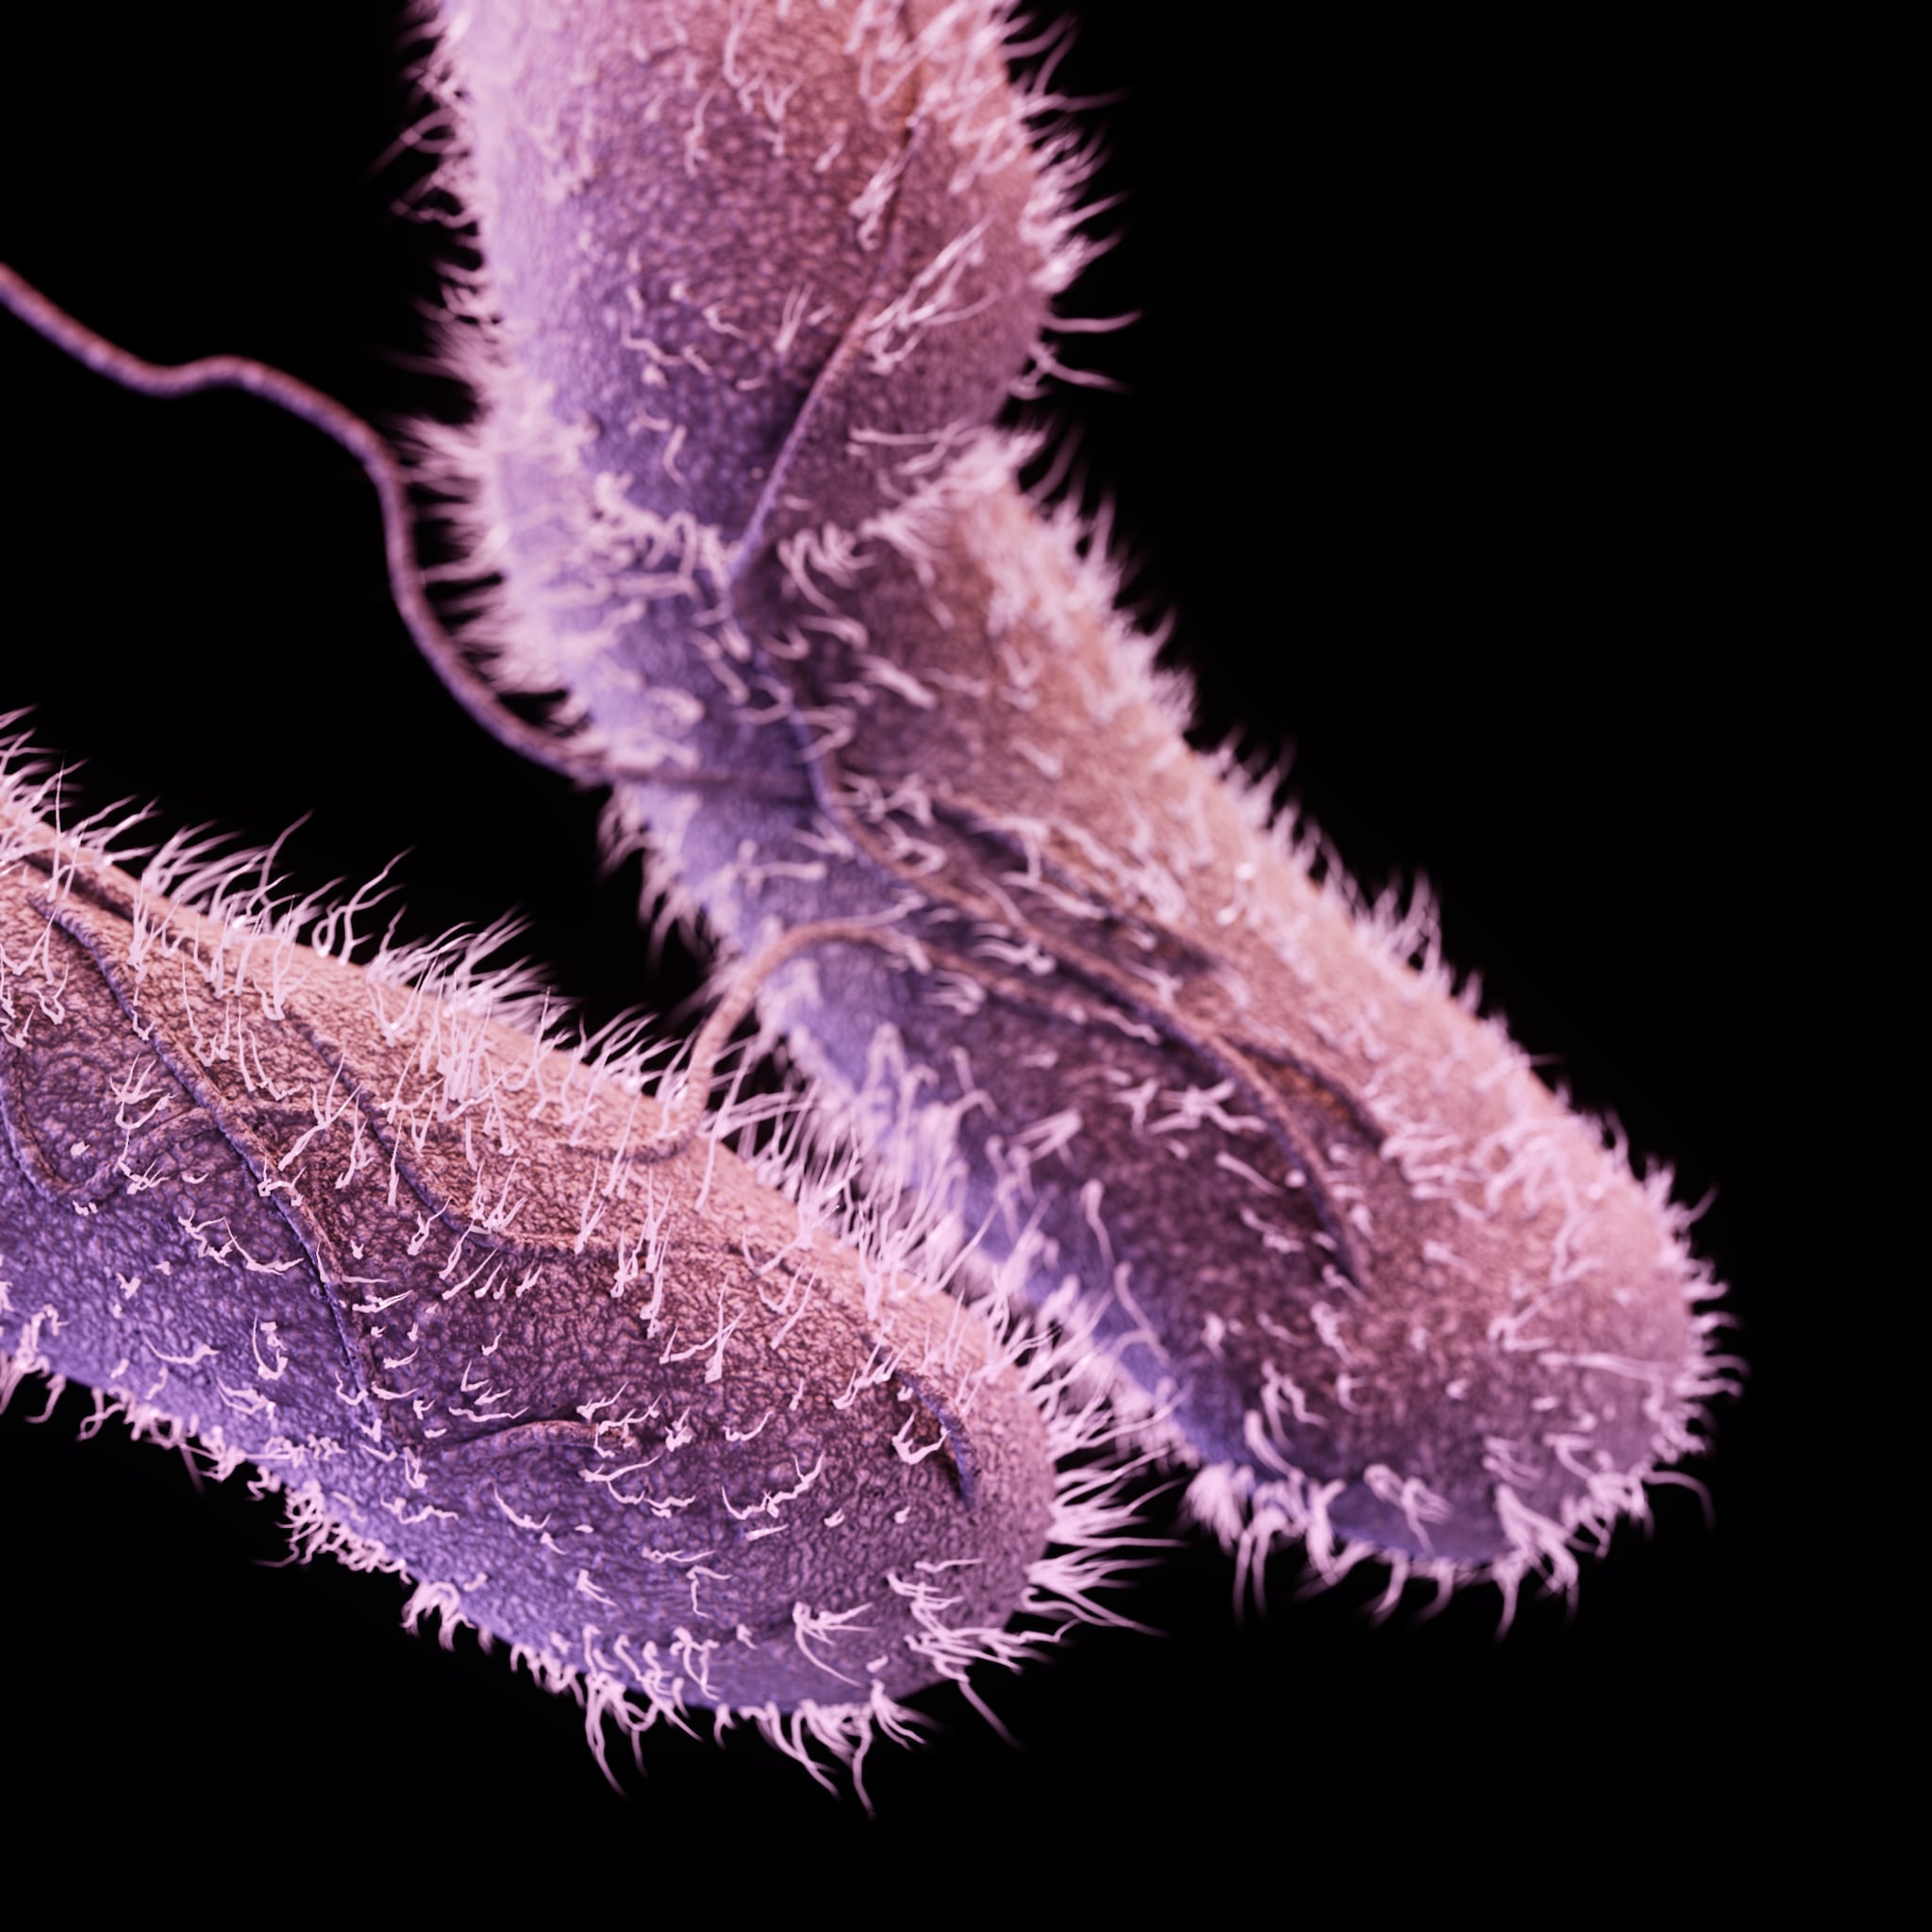 Medical illustration of Drug-resistant non-typhoidal salmonella